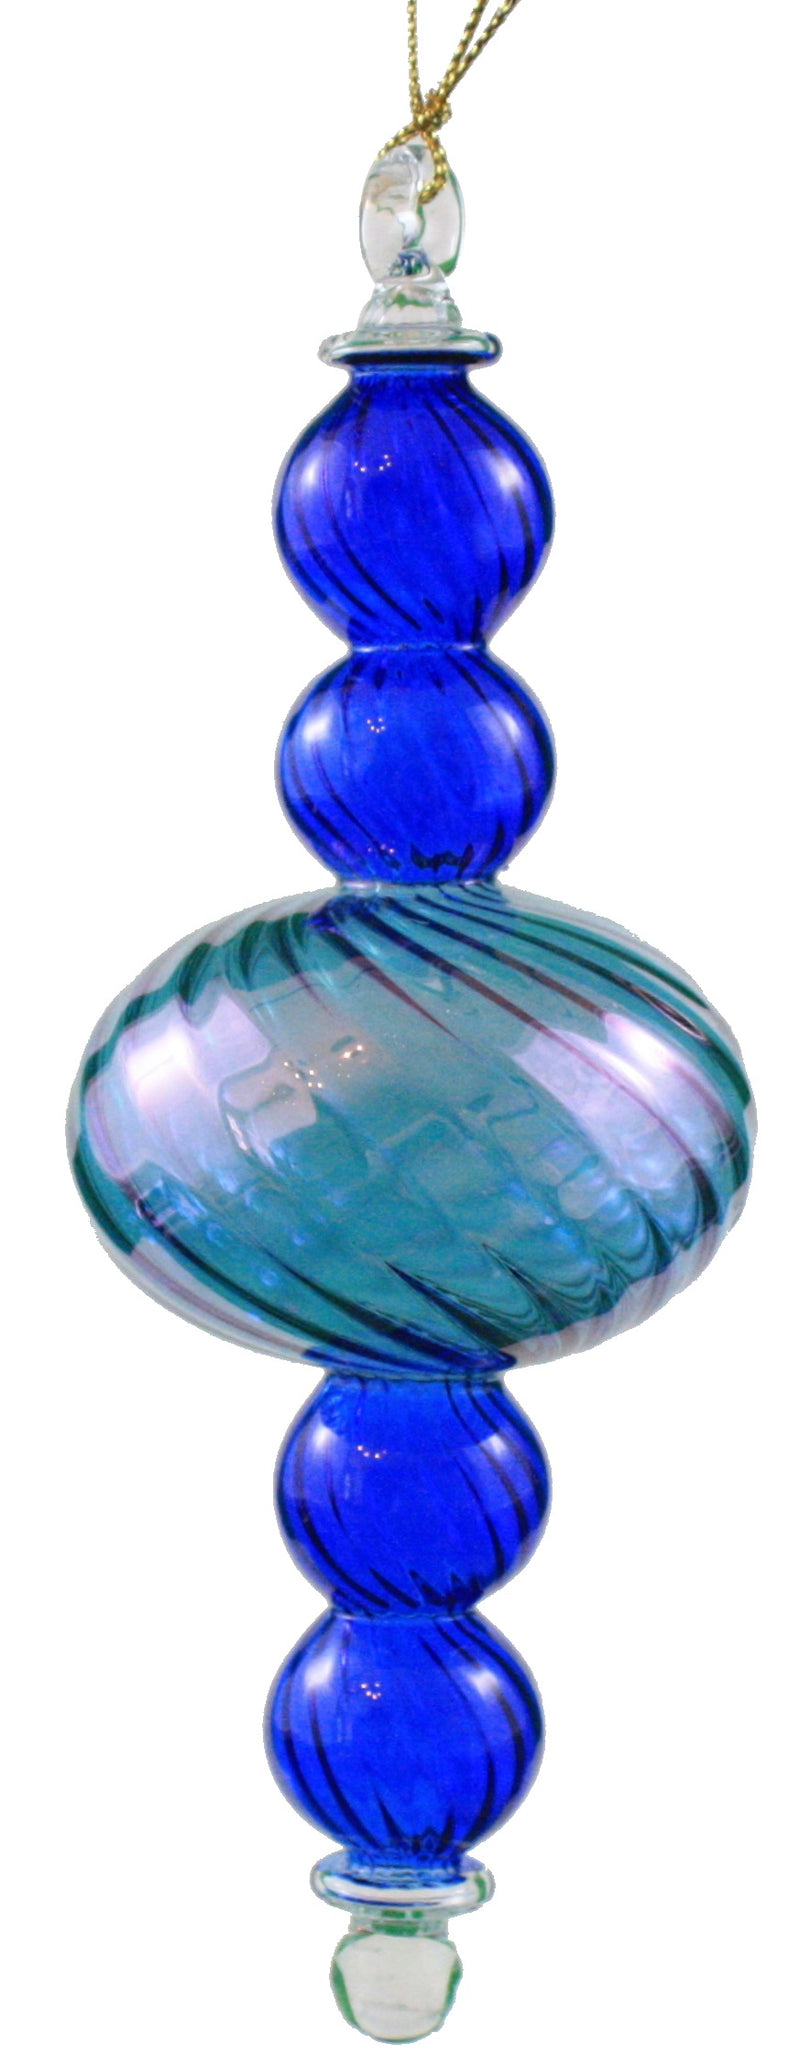 Midsize Organic Luster 5 Section Globe - Blue